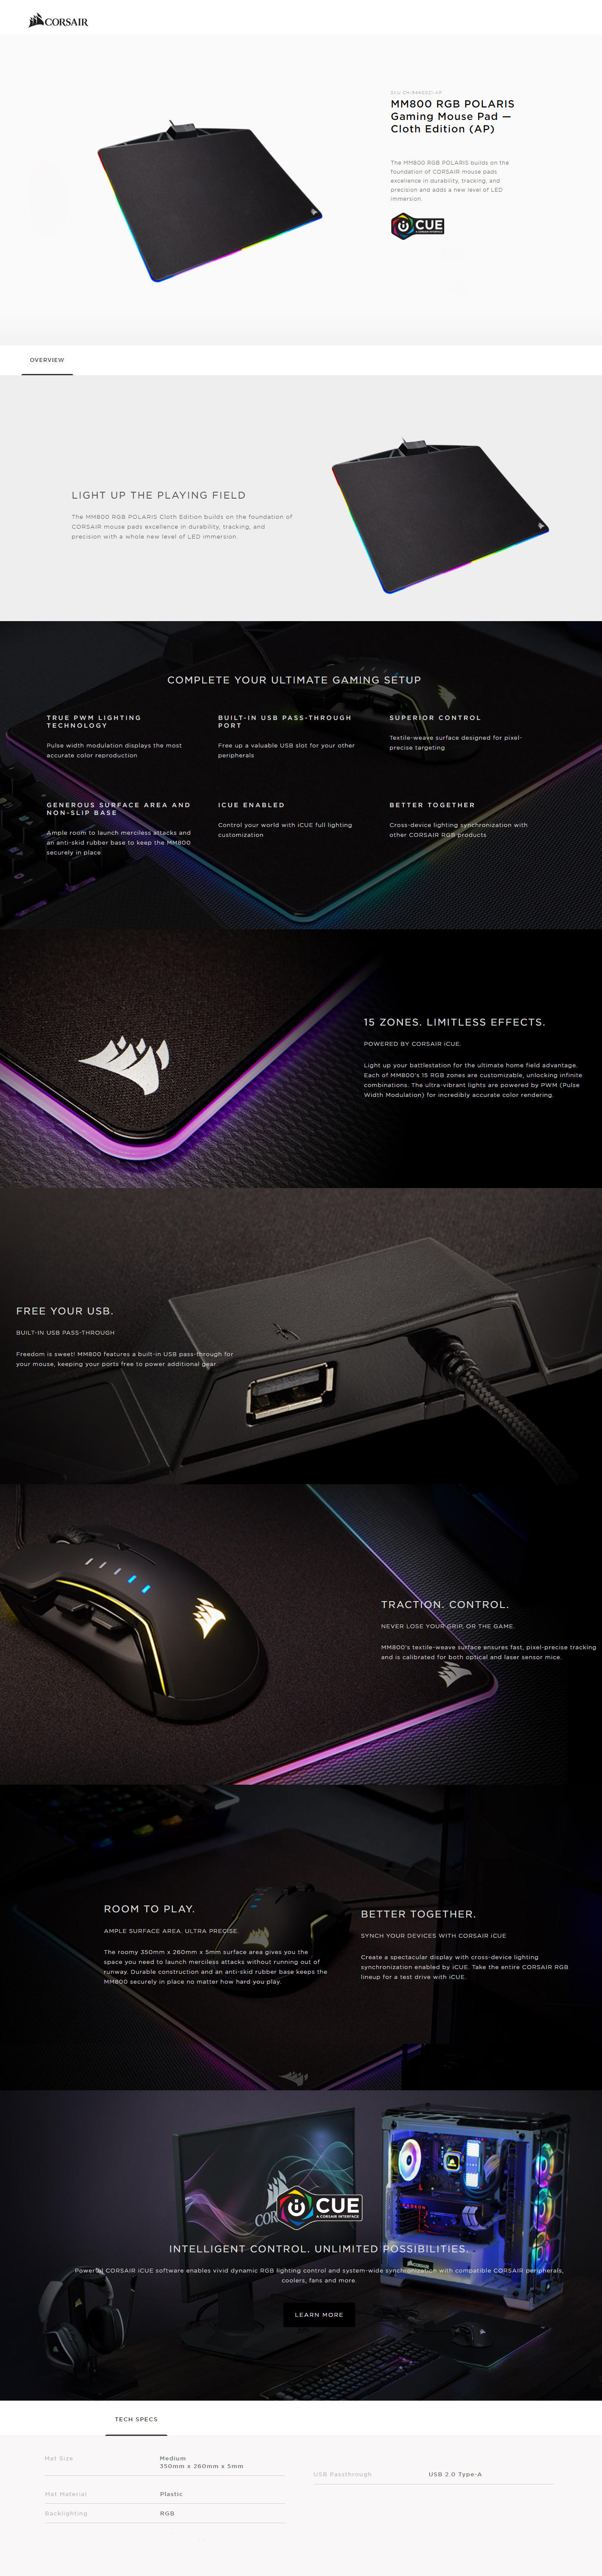 Buy Online Corsair MM800 RGB Polaris Gaming Mouse Pad - Cloth Edition (CH-9440021-AP)